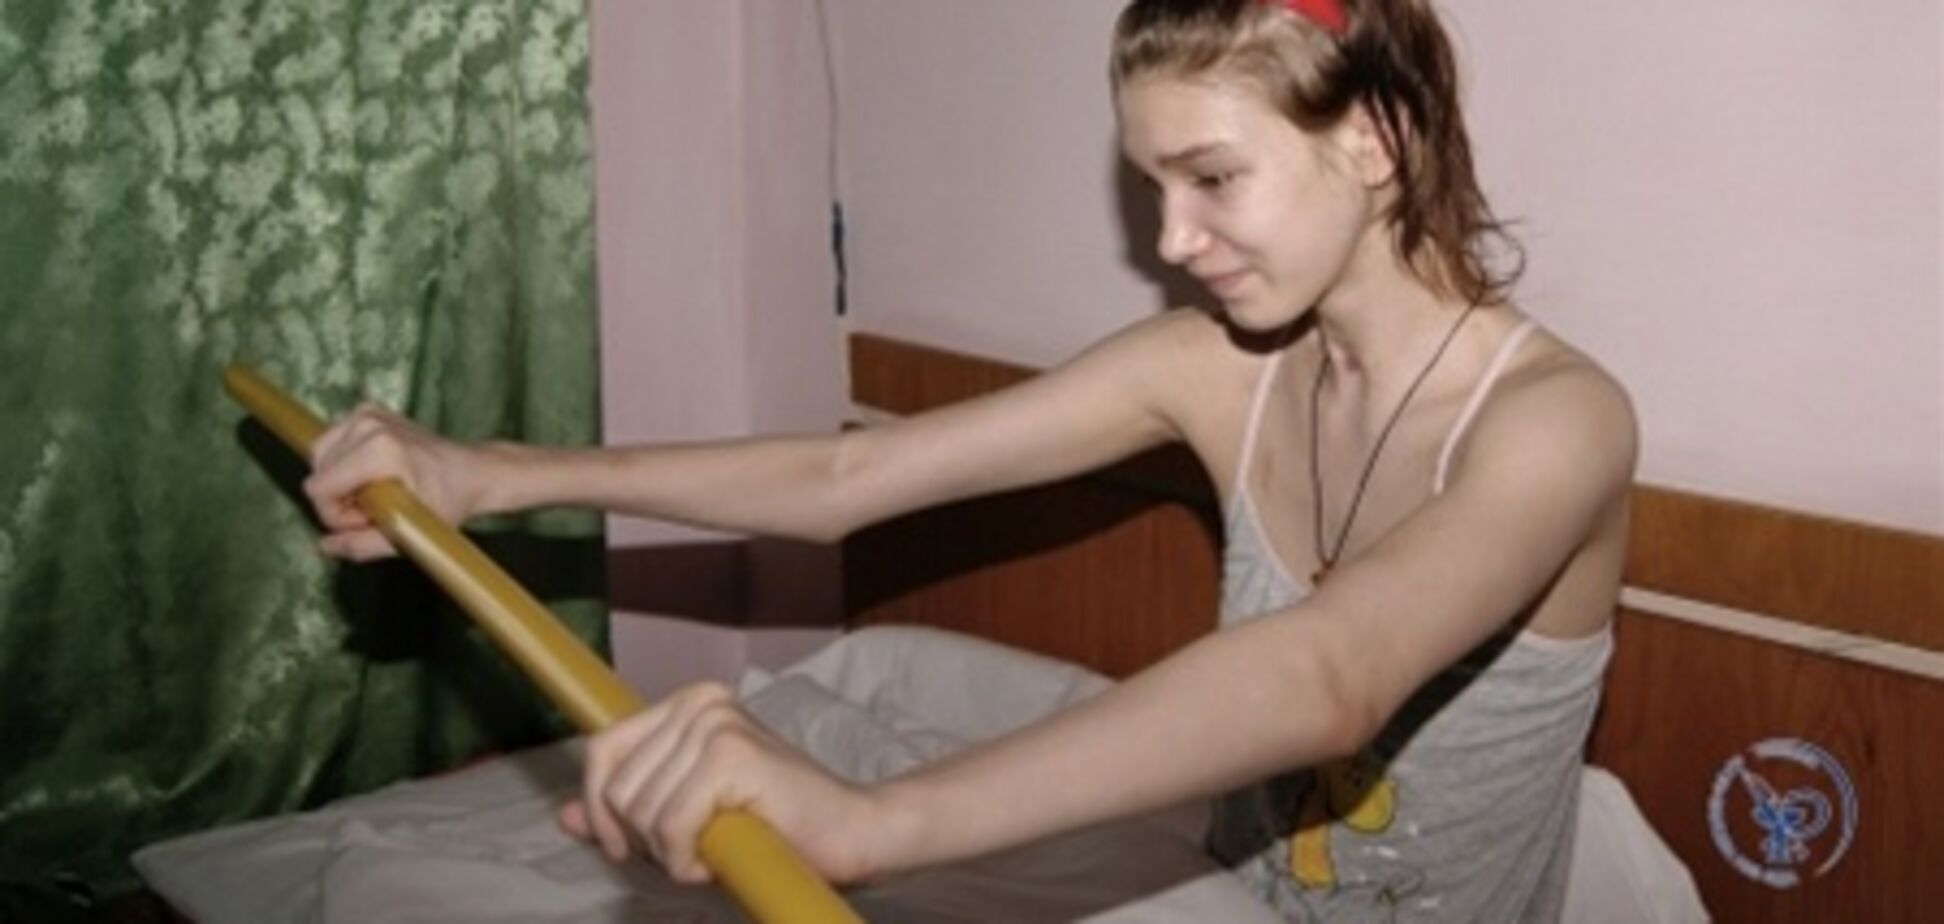 Саша Попова начала реабилитацию в санатории